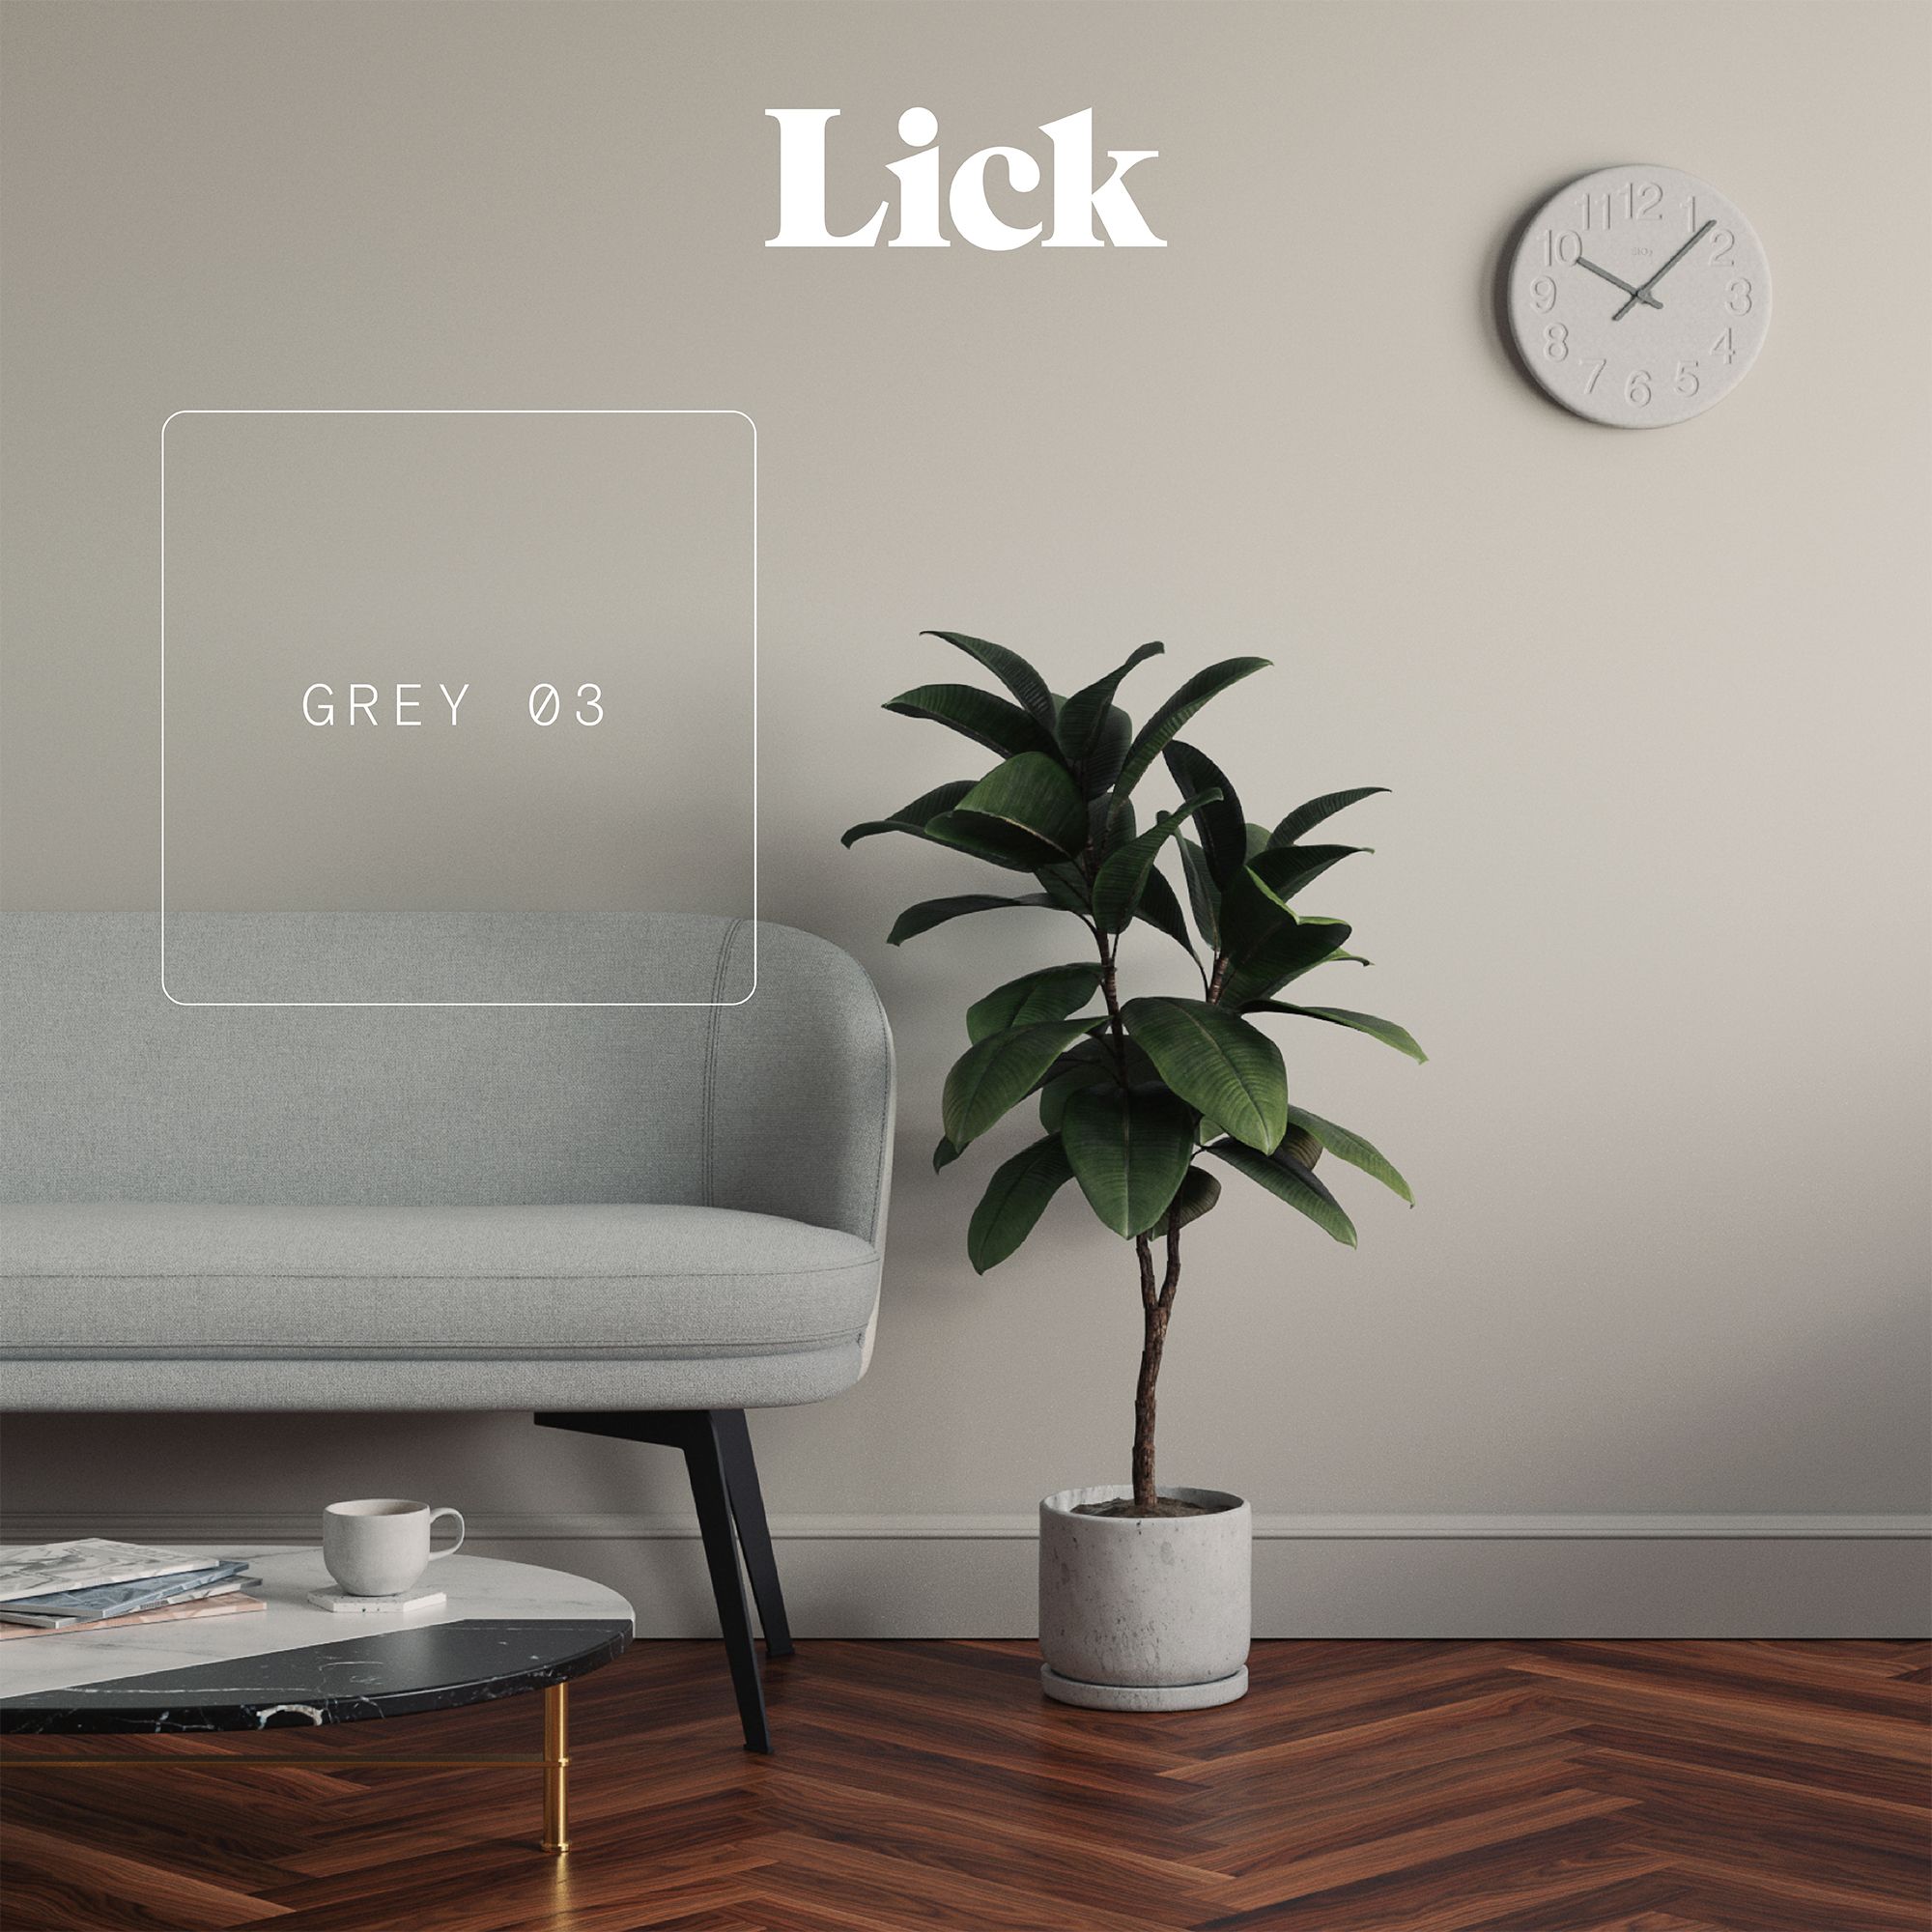 Lick Grey 03 Matt Emulsion paint, 2.5L